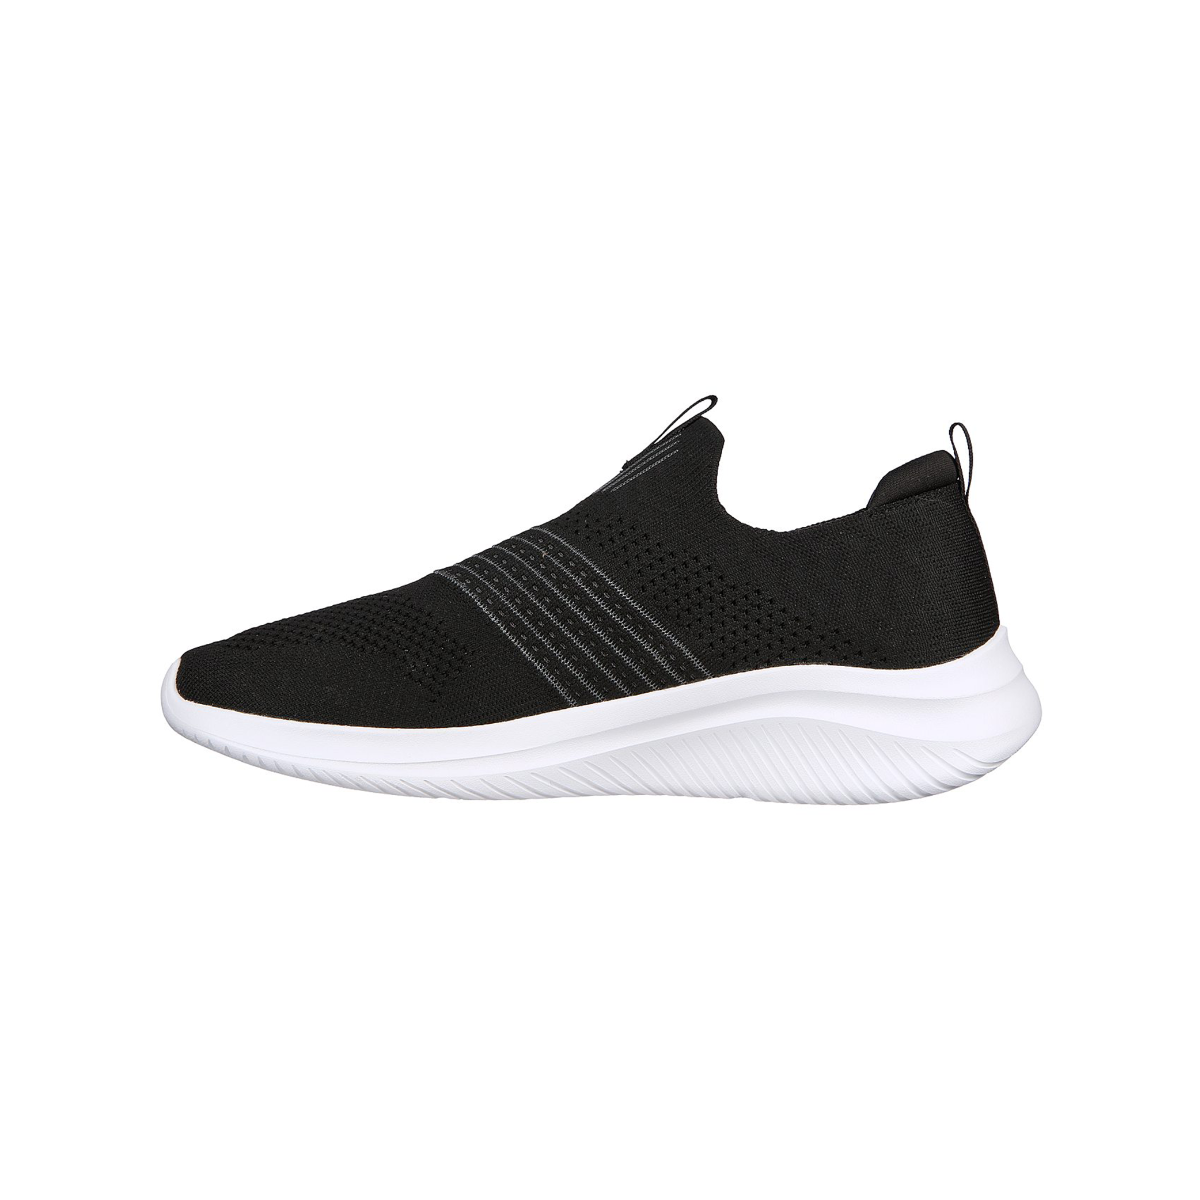 Skechers Ultra Flex 3.0 Lifestyle Shoes For Men, Black & White